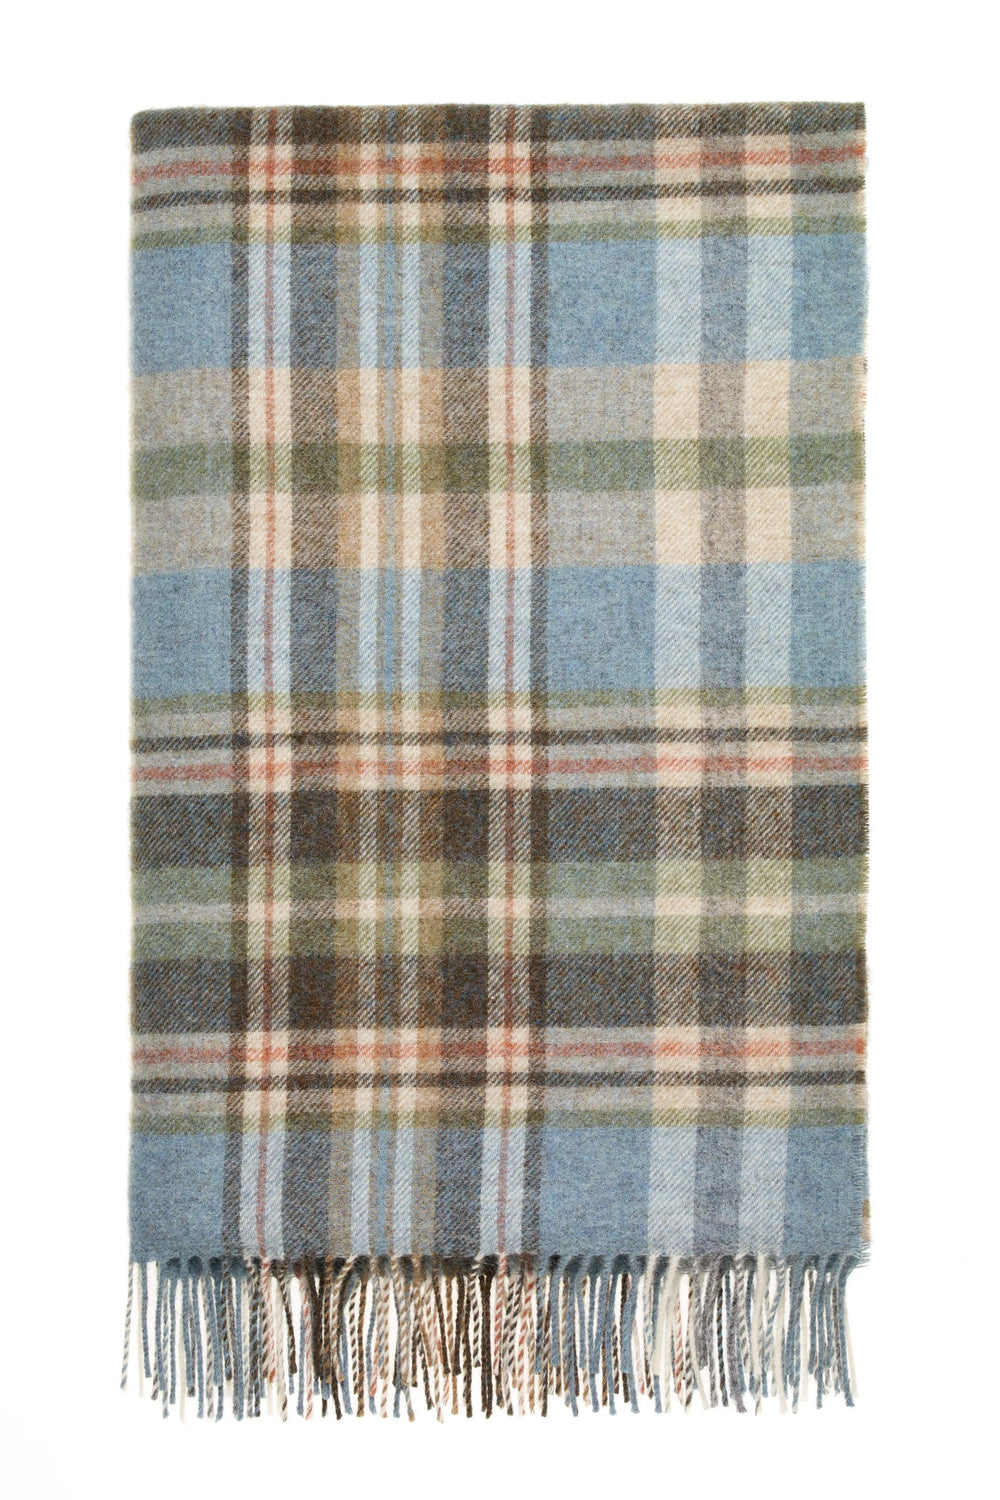 Glen Coe Aqua Blanket